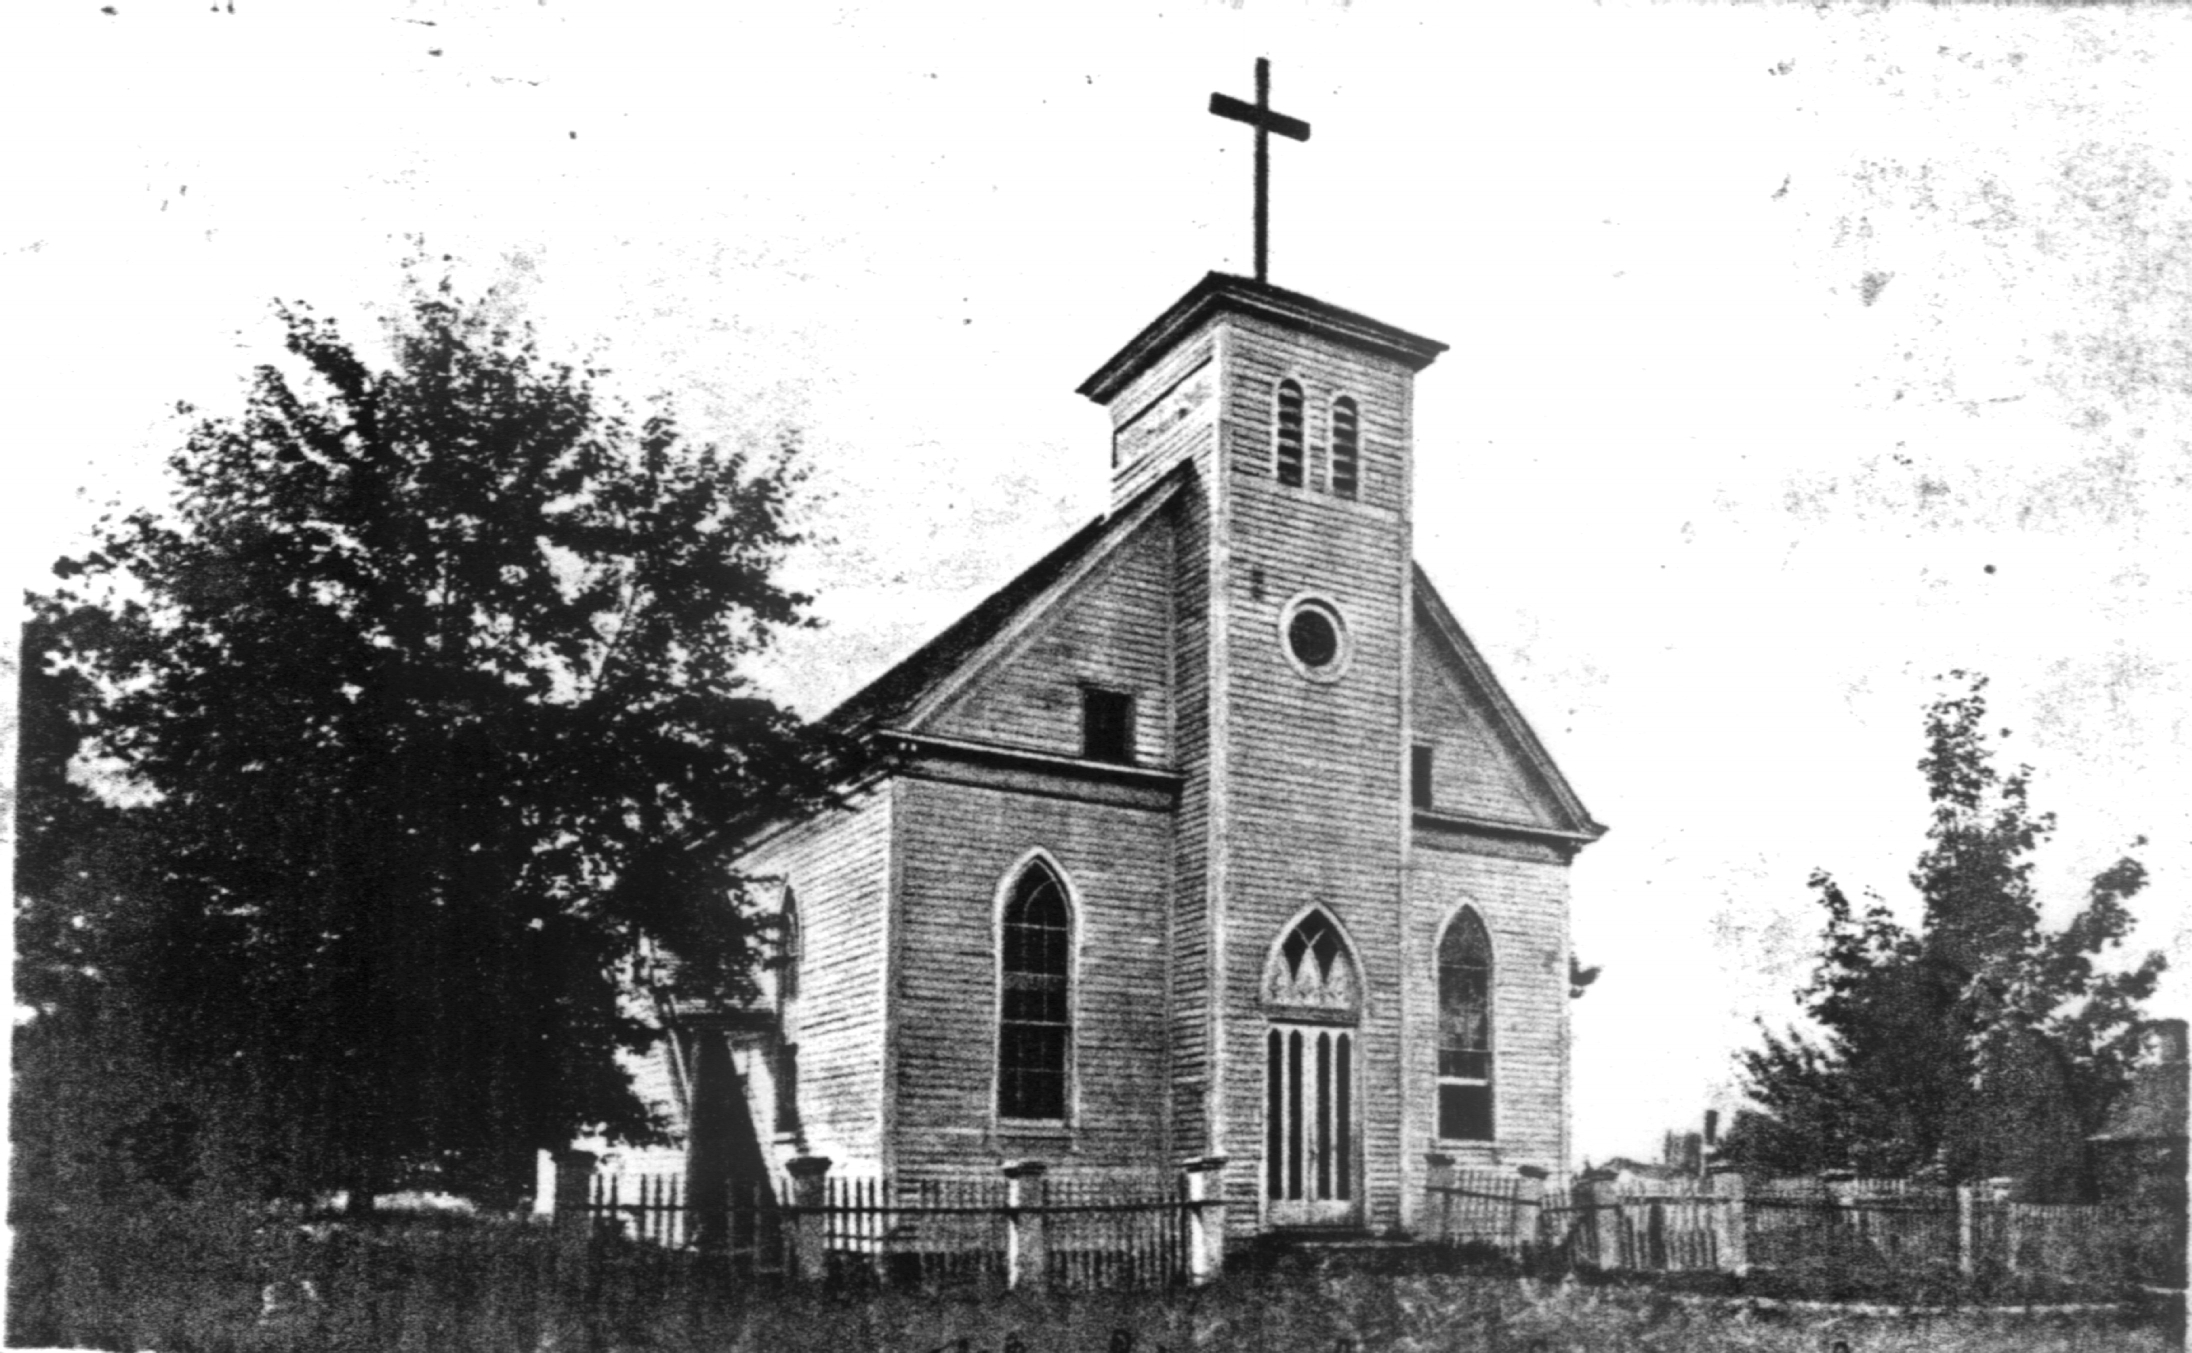 ORIGINAL CHURCH